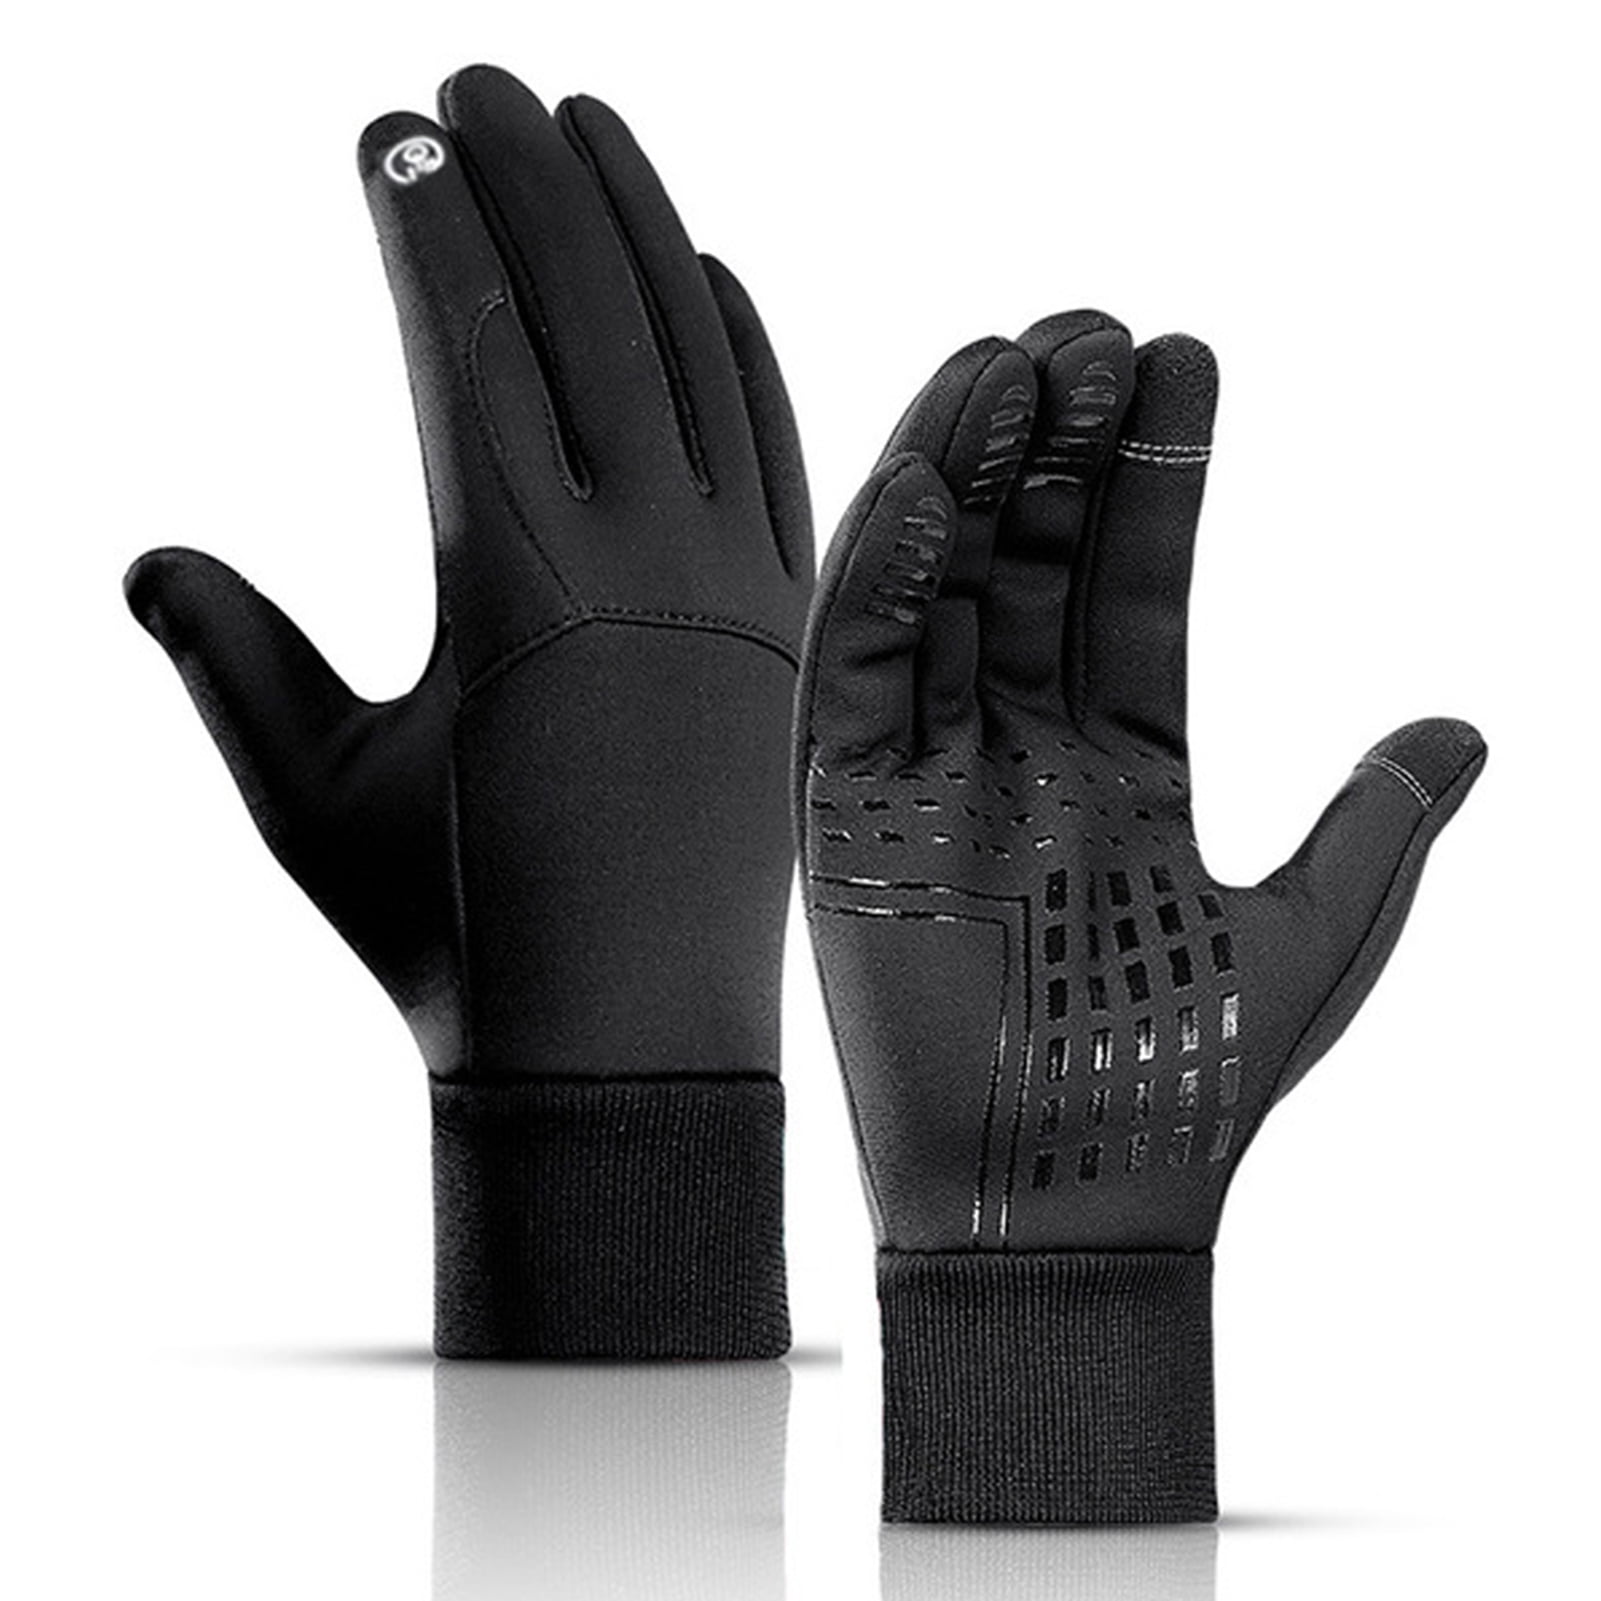 Lixada Cycling Gloves Touchscreen Anti-Slip Riding Driving Full Fingers Gloves Shock Absorbent Bike Motorbike Riding Gloves 